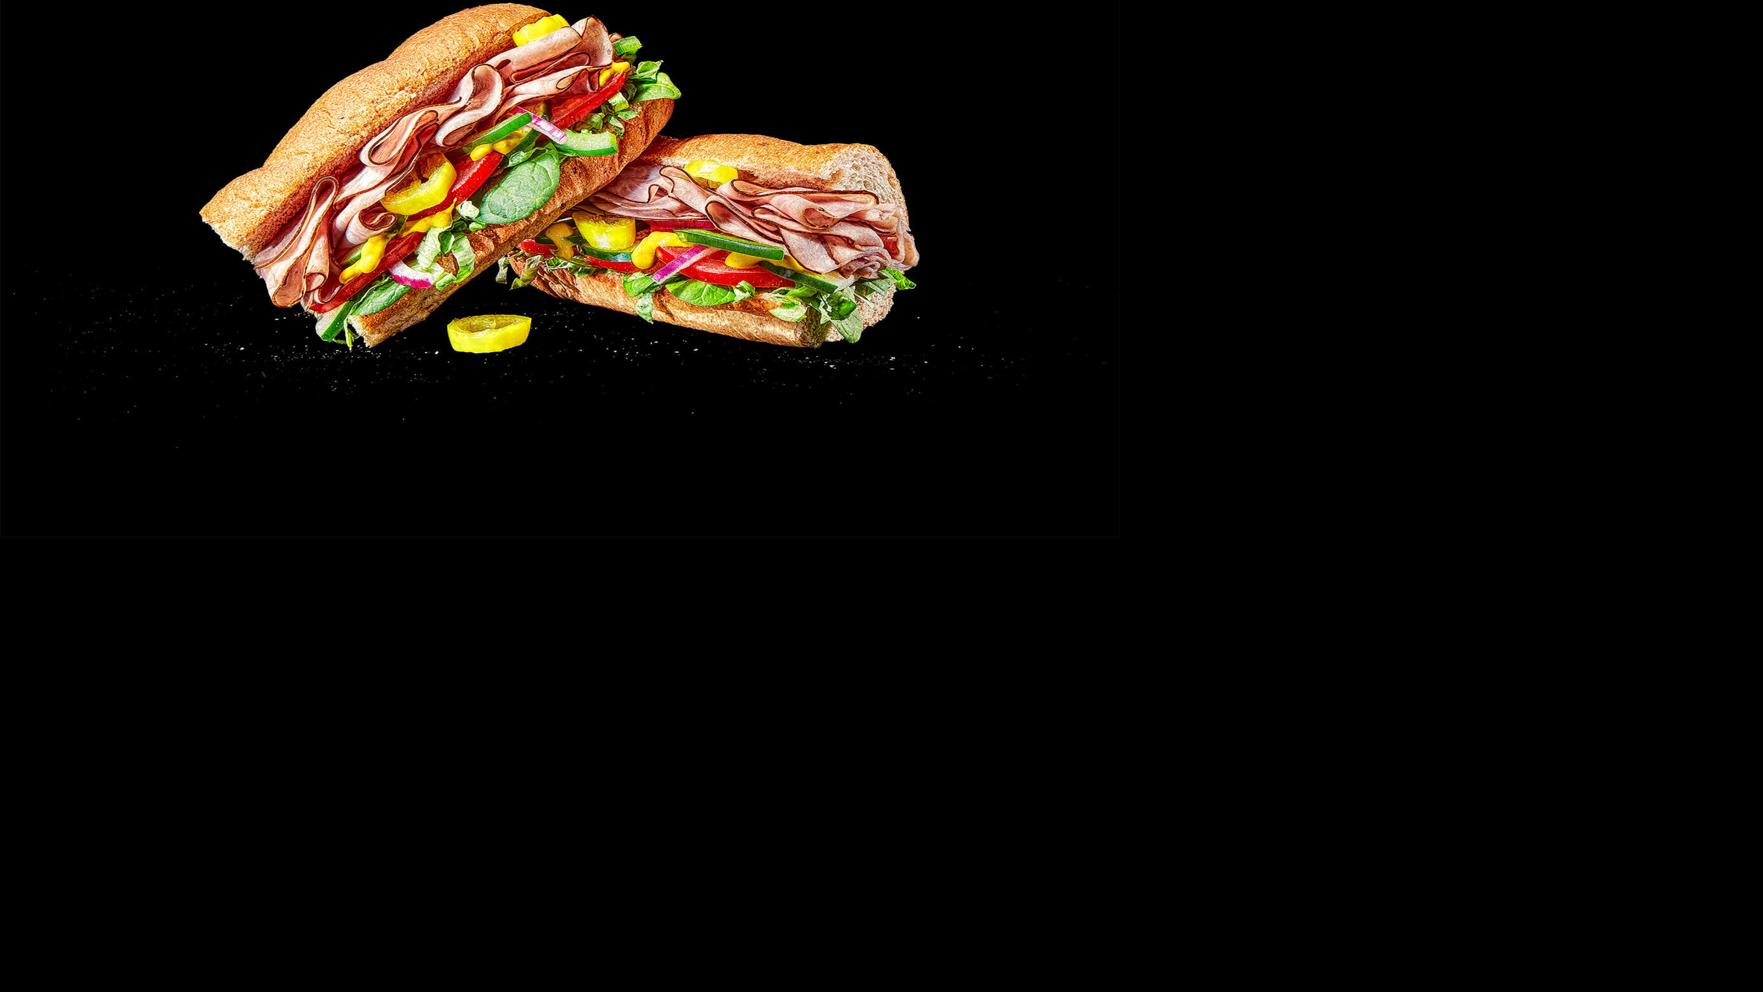 Gross Subway Sandwich Combinations